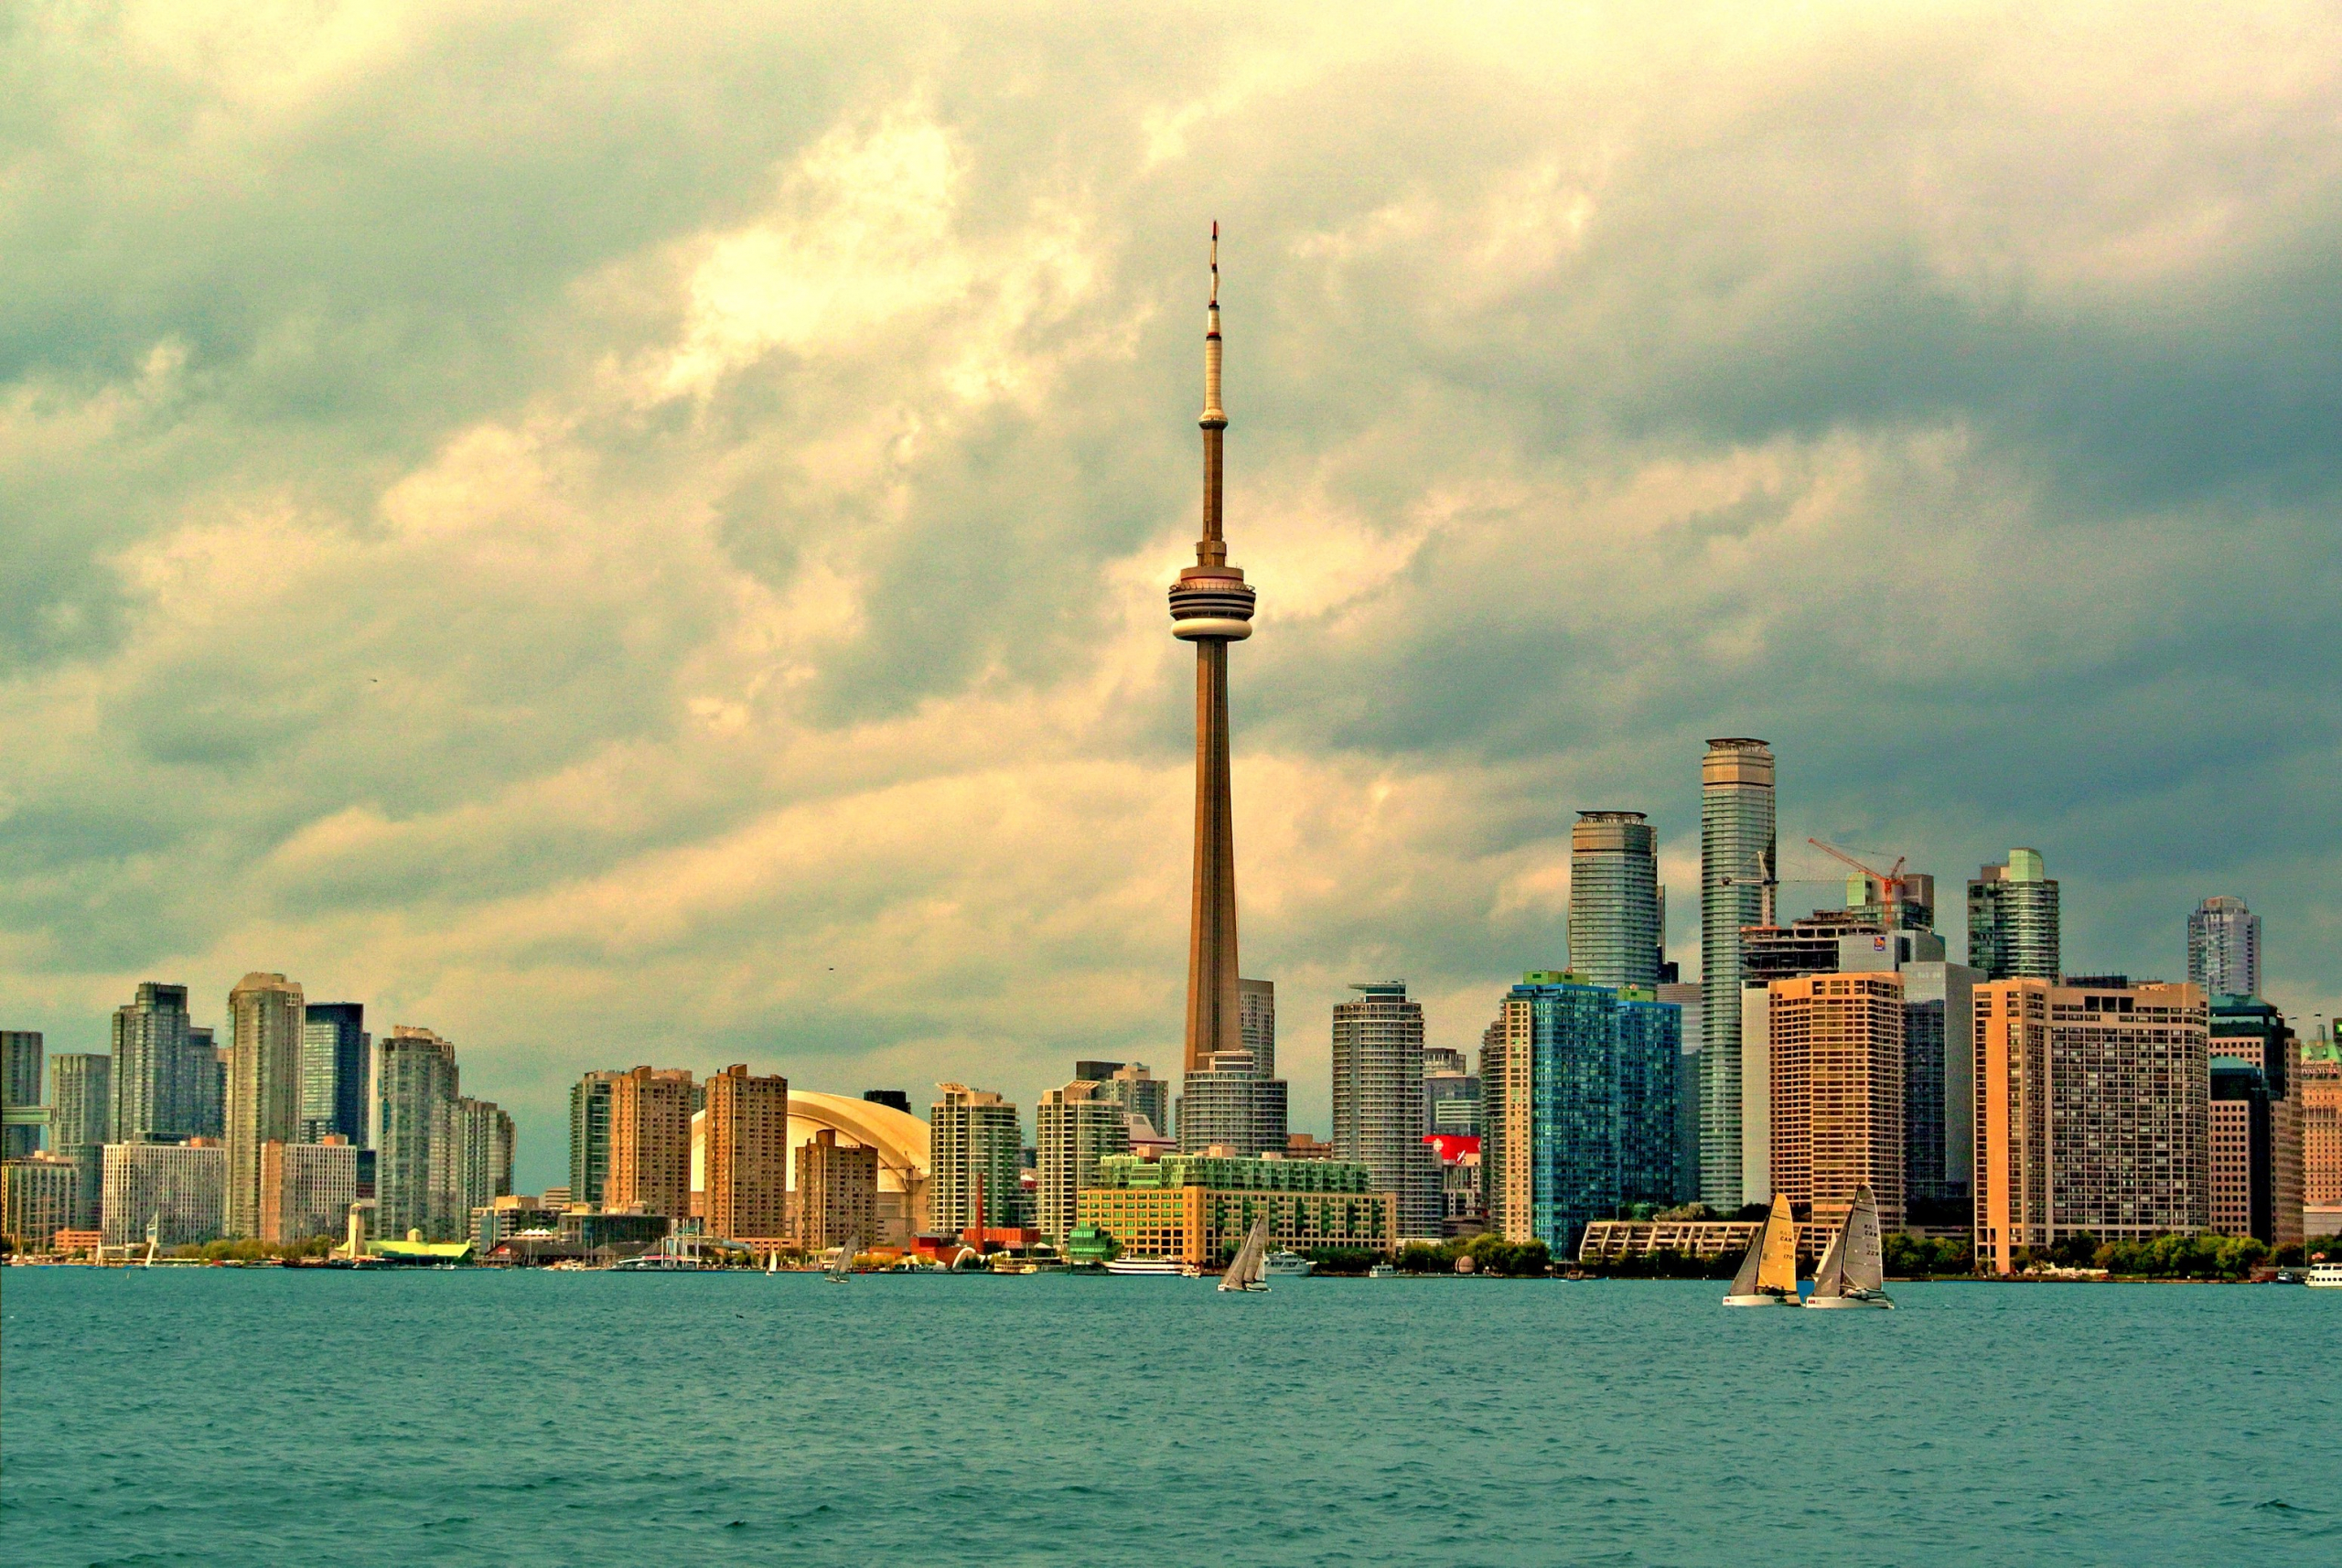 The Toronto skyline along Lake Ontario